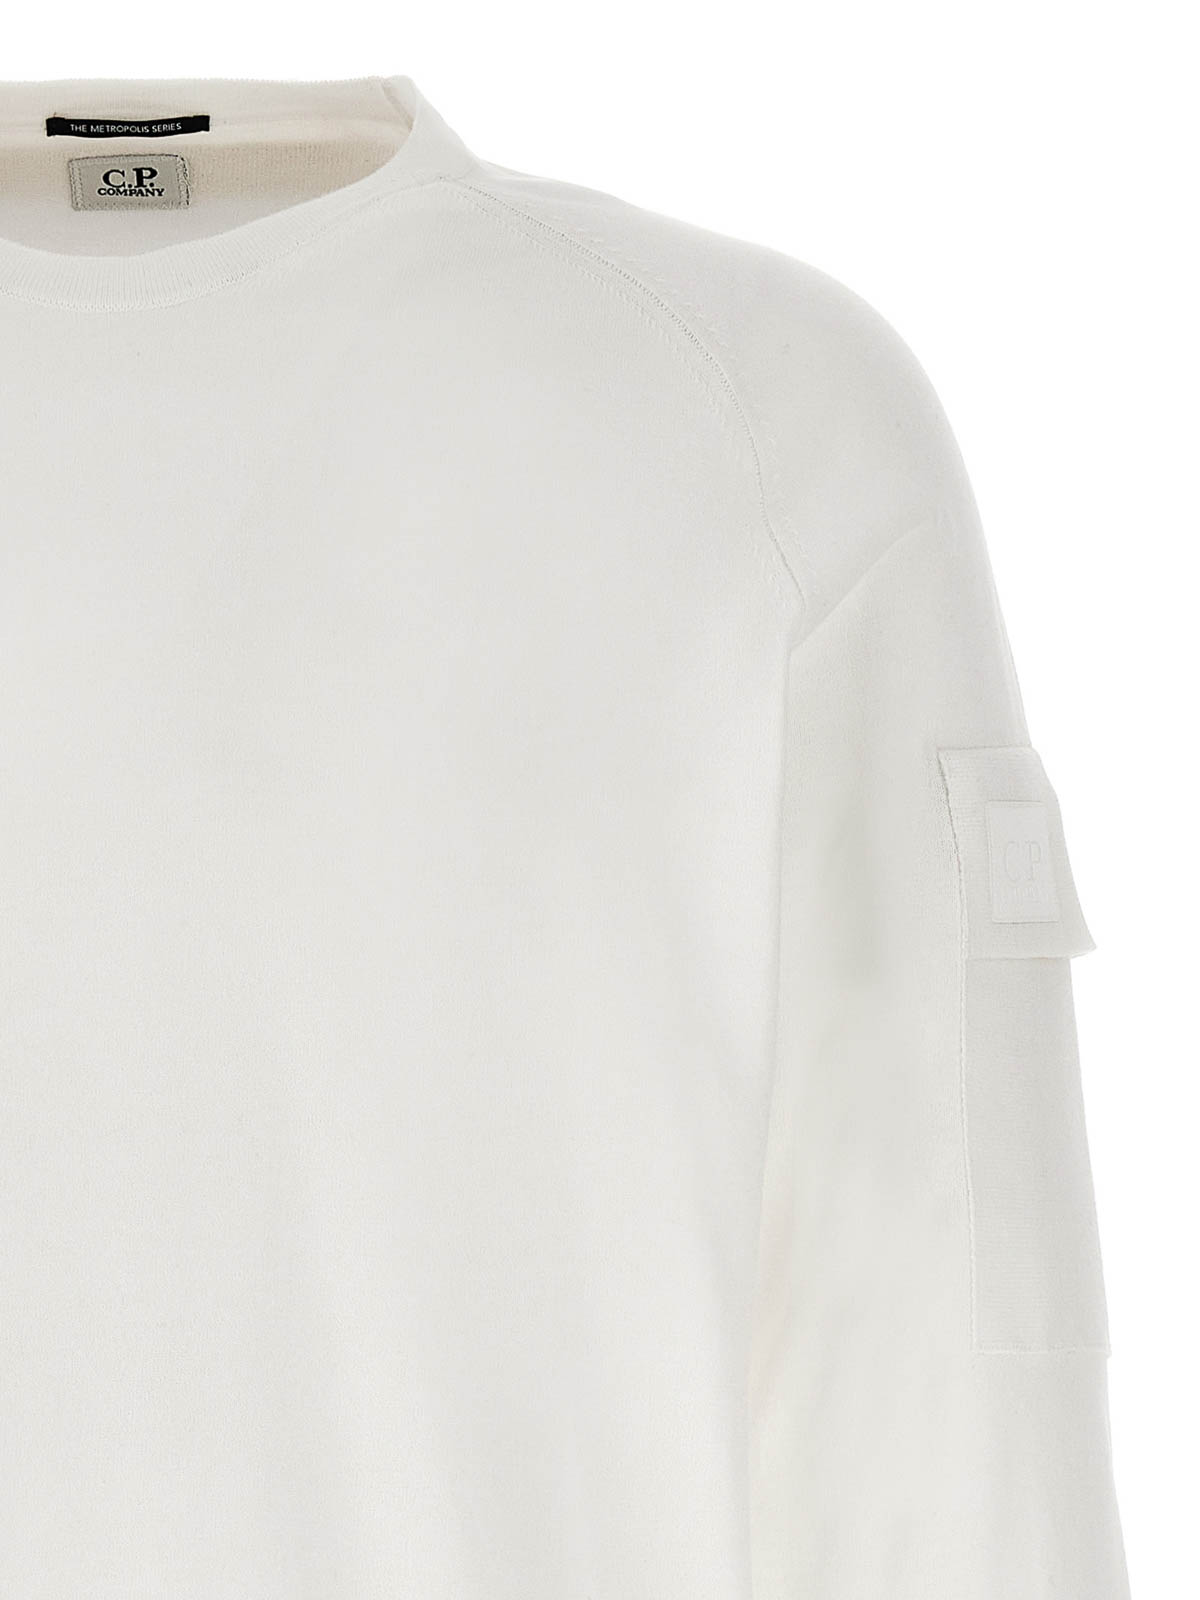 Shop C.p. Company The Metropolis Series Sweater In Blanco